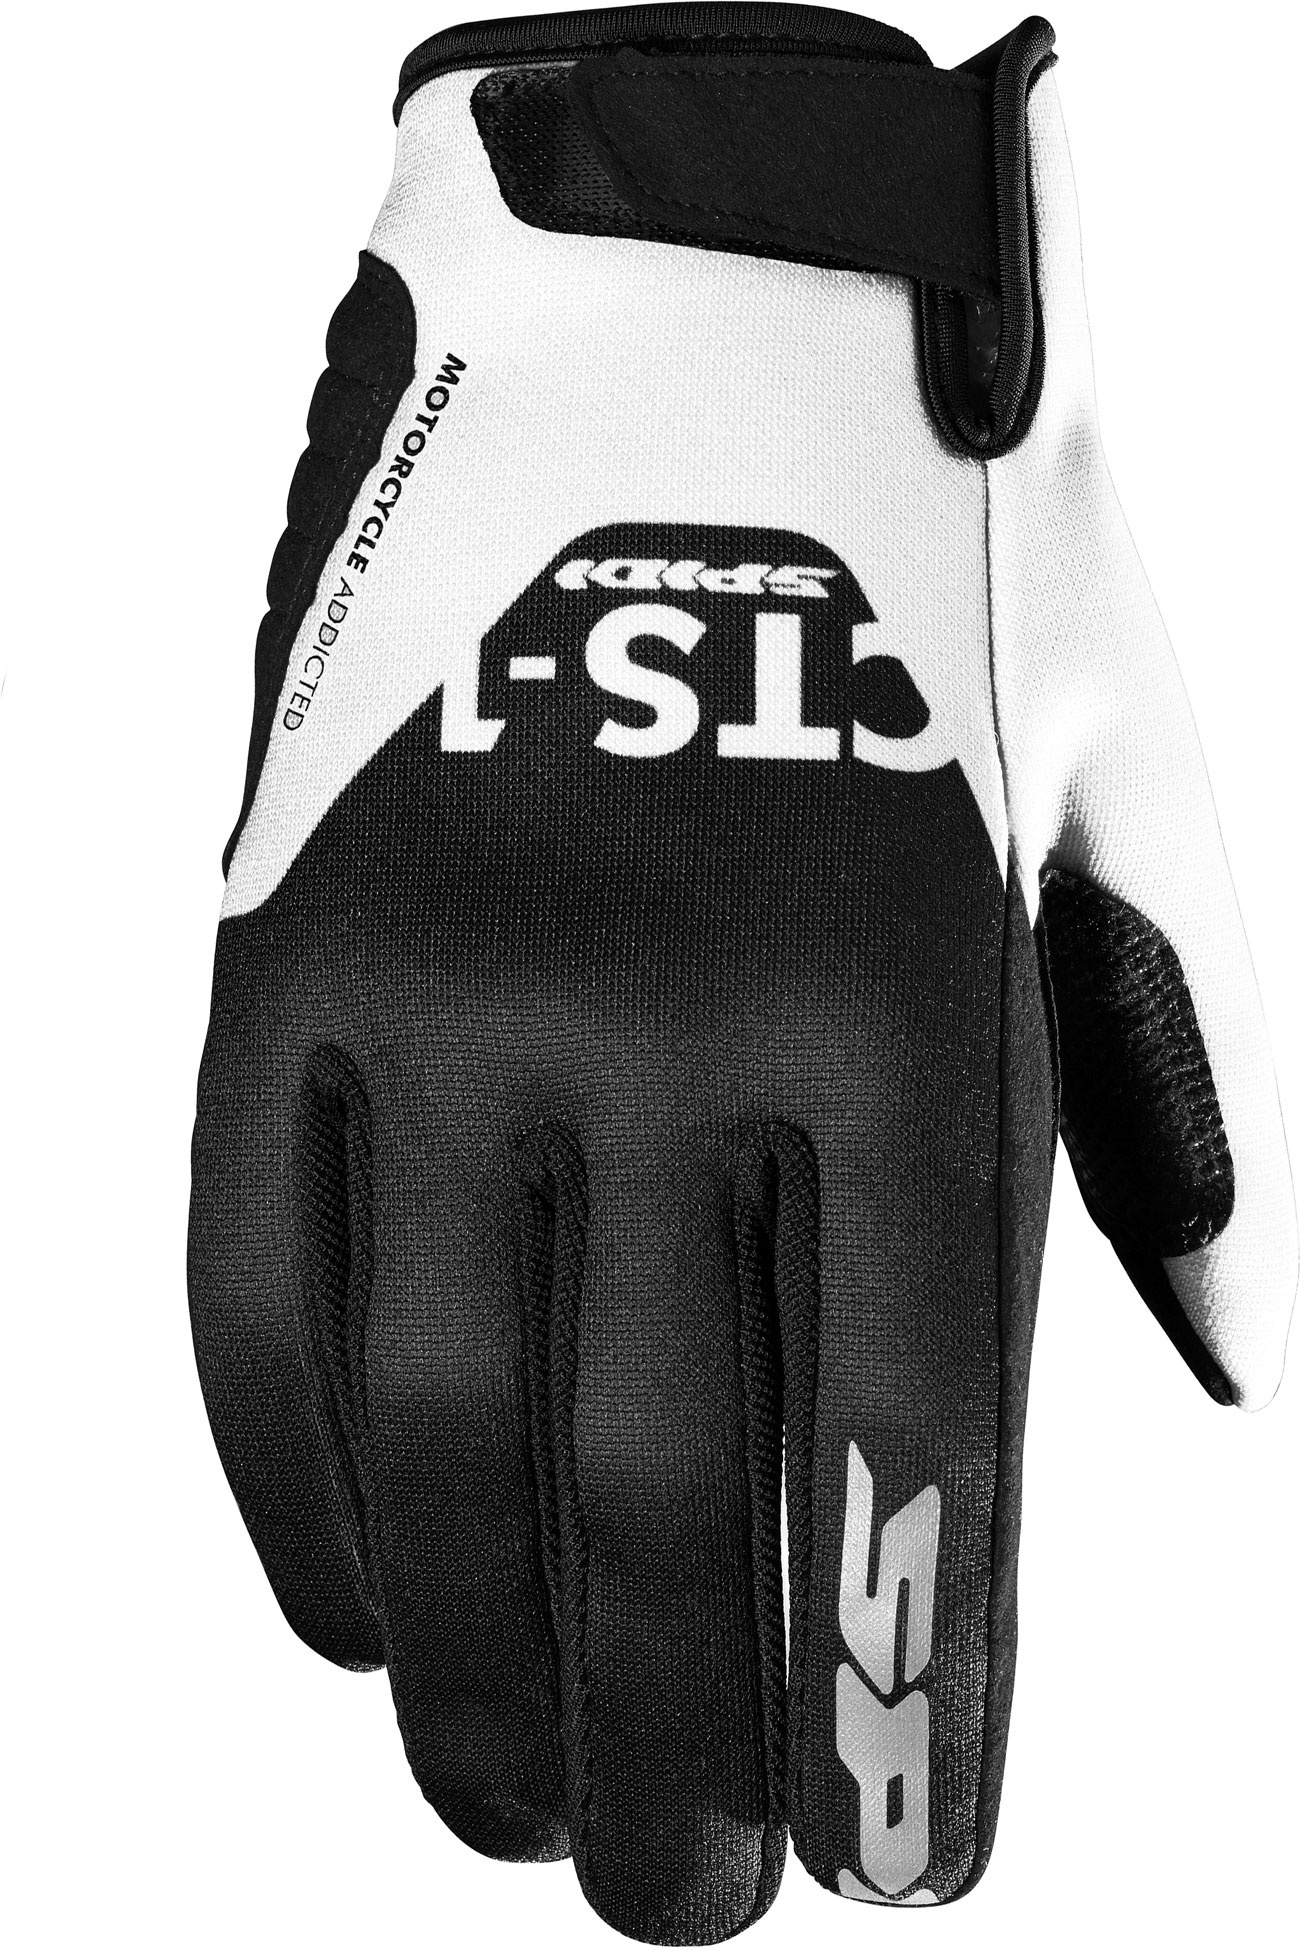 Spidi CTS-1, gants - Noir/Blanc - XL